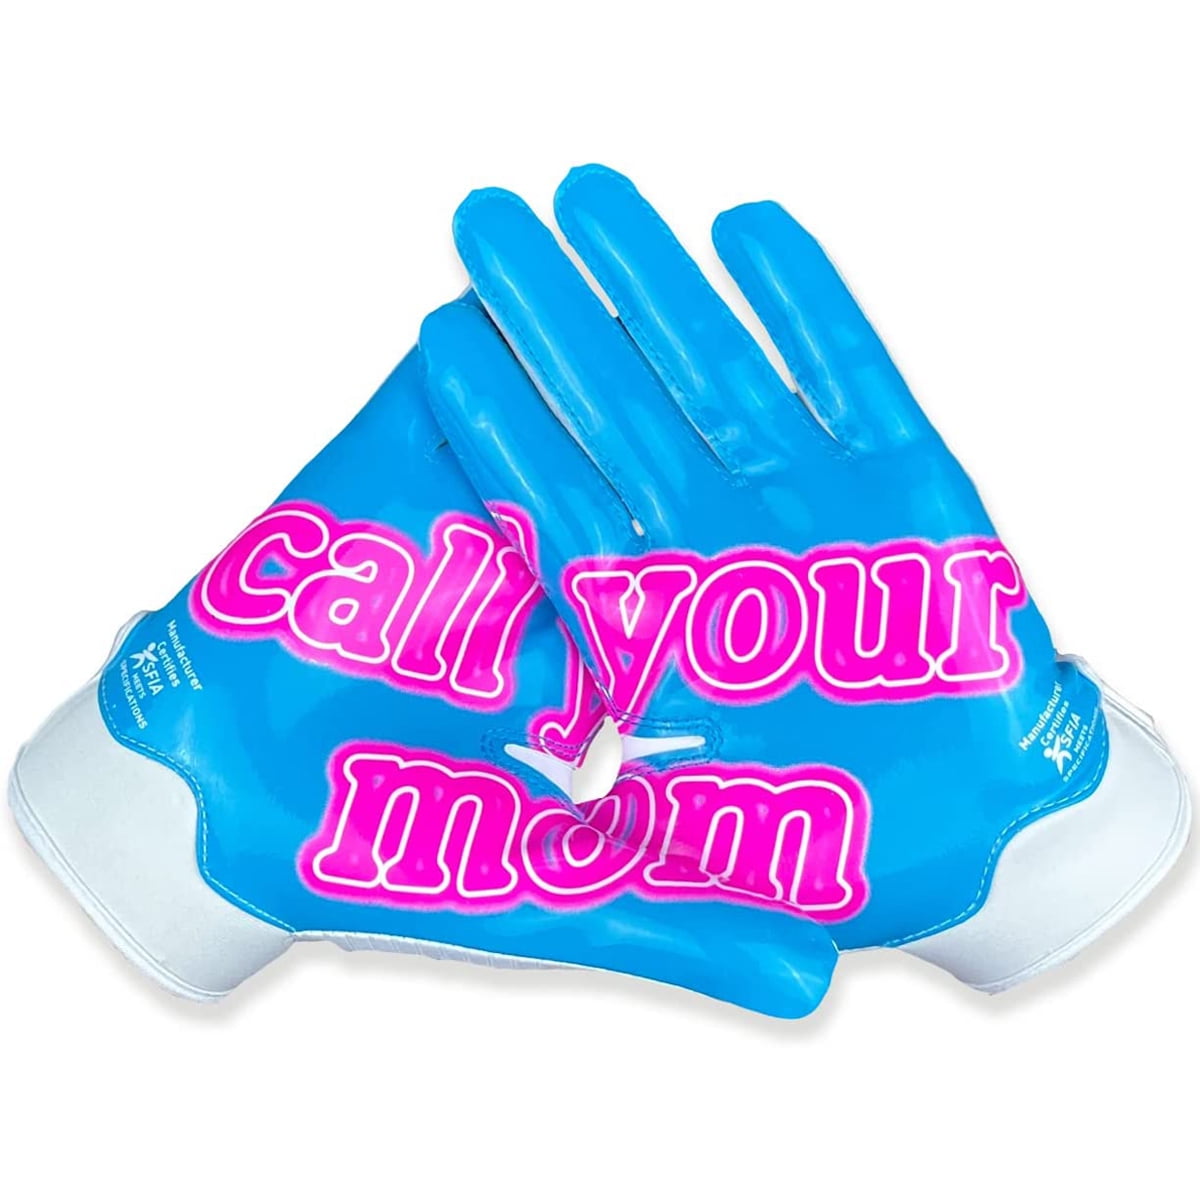 Custom Football Gloves, Custom Design Football Receiver Gloves